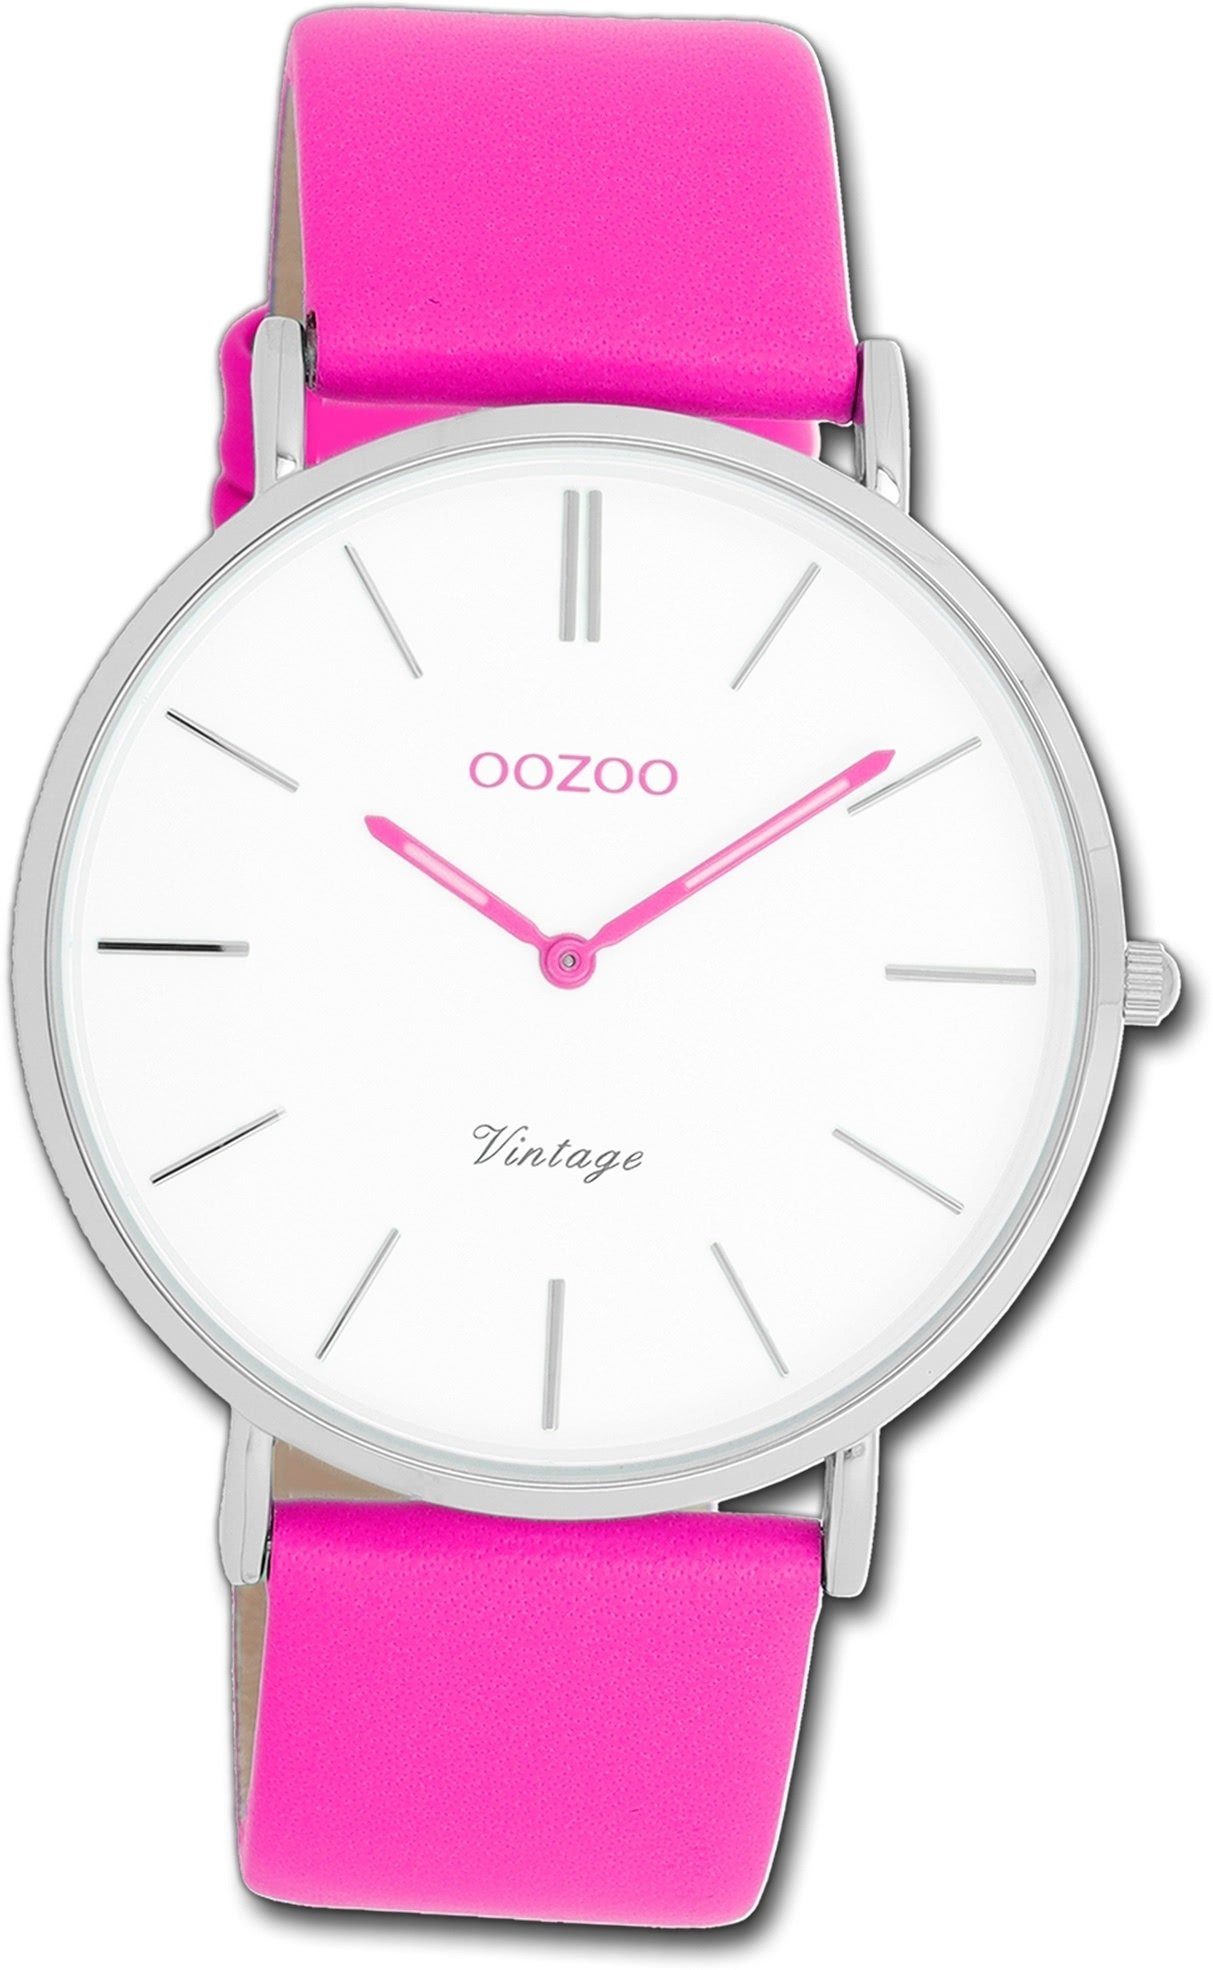 OOZOO Quarzuhr Oozoo Damen Armbanduhr pink, 40mm) Vintage (ca. Gehäuse, pink, rundes groß Lederarmband Damenuhr